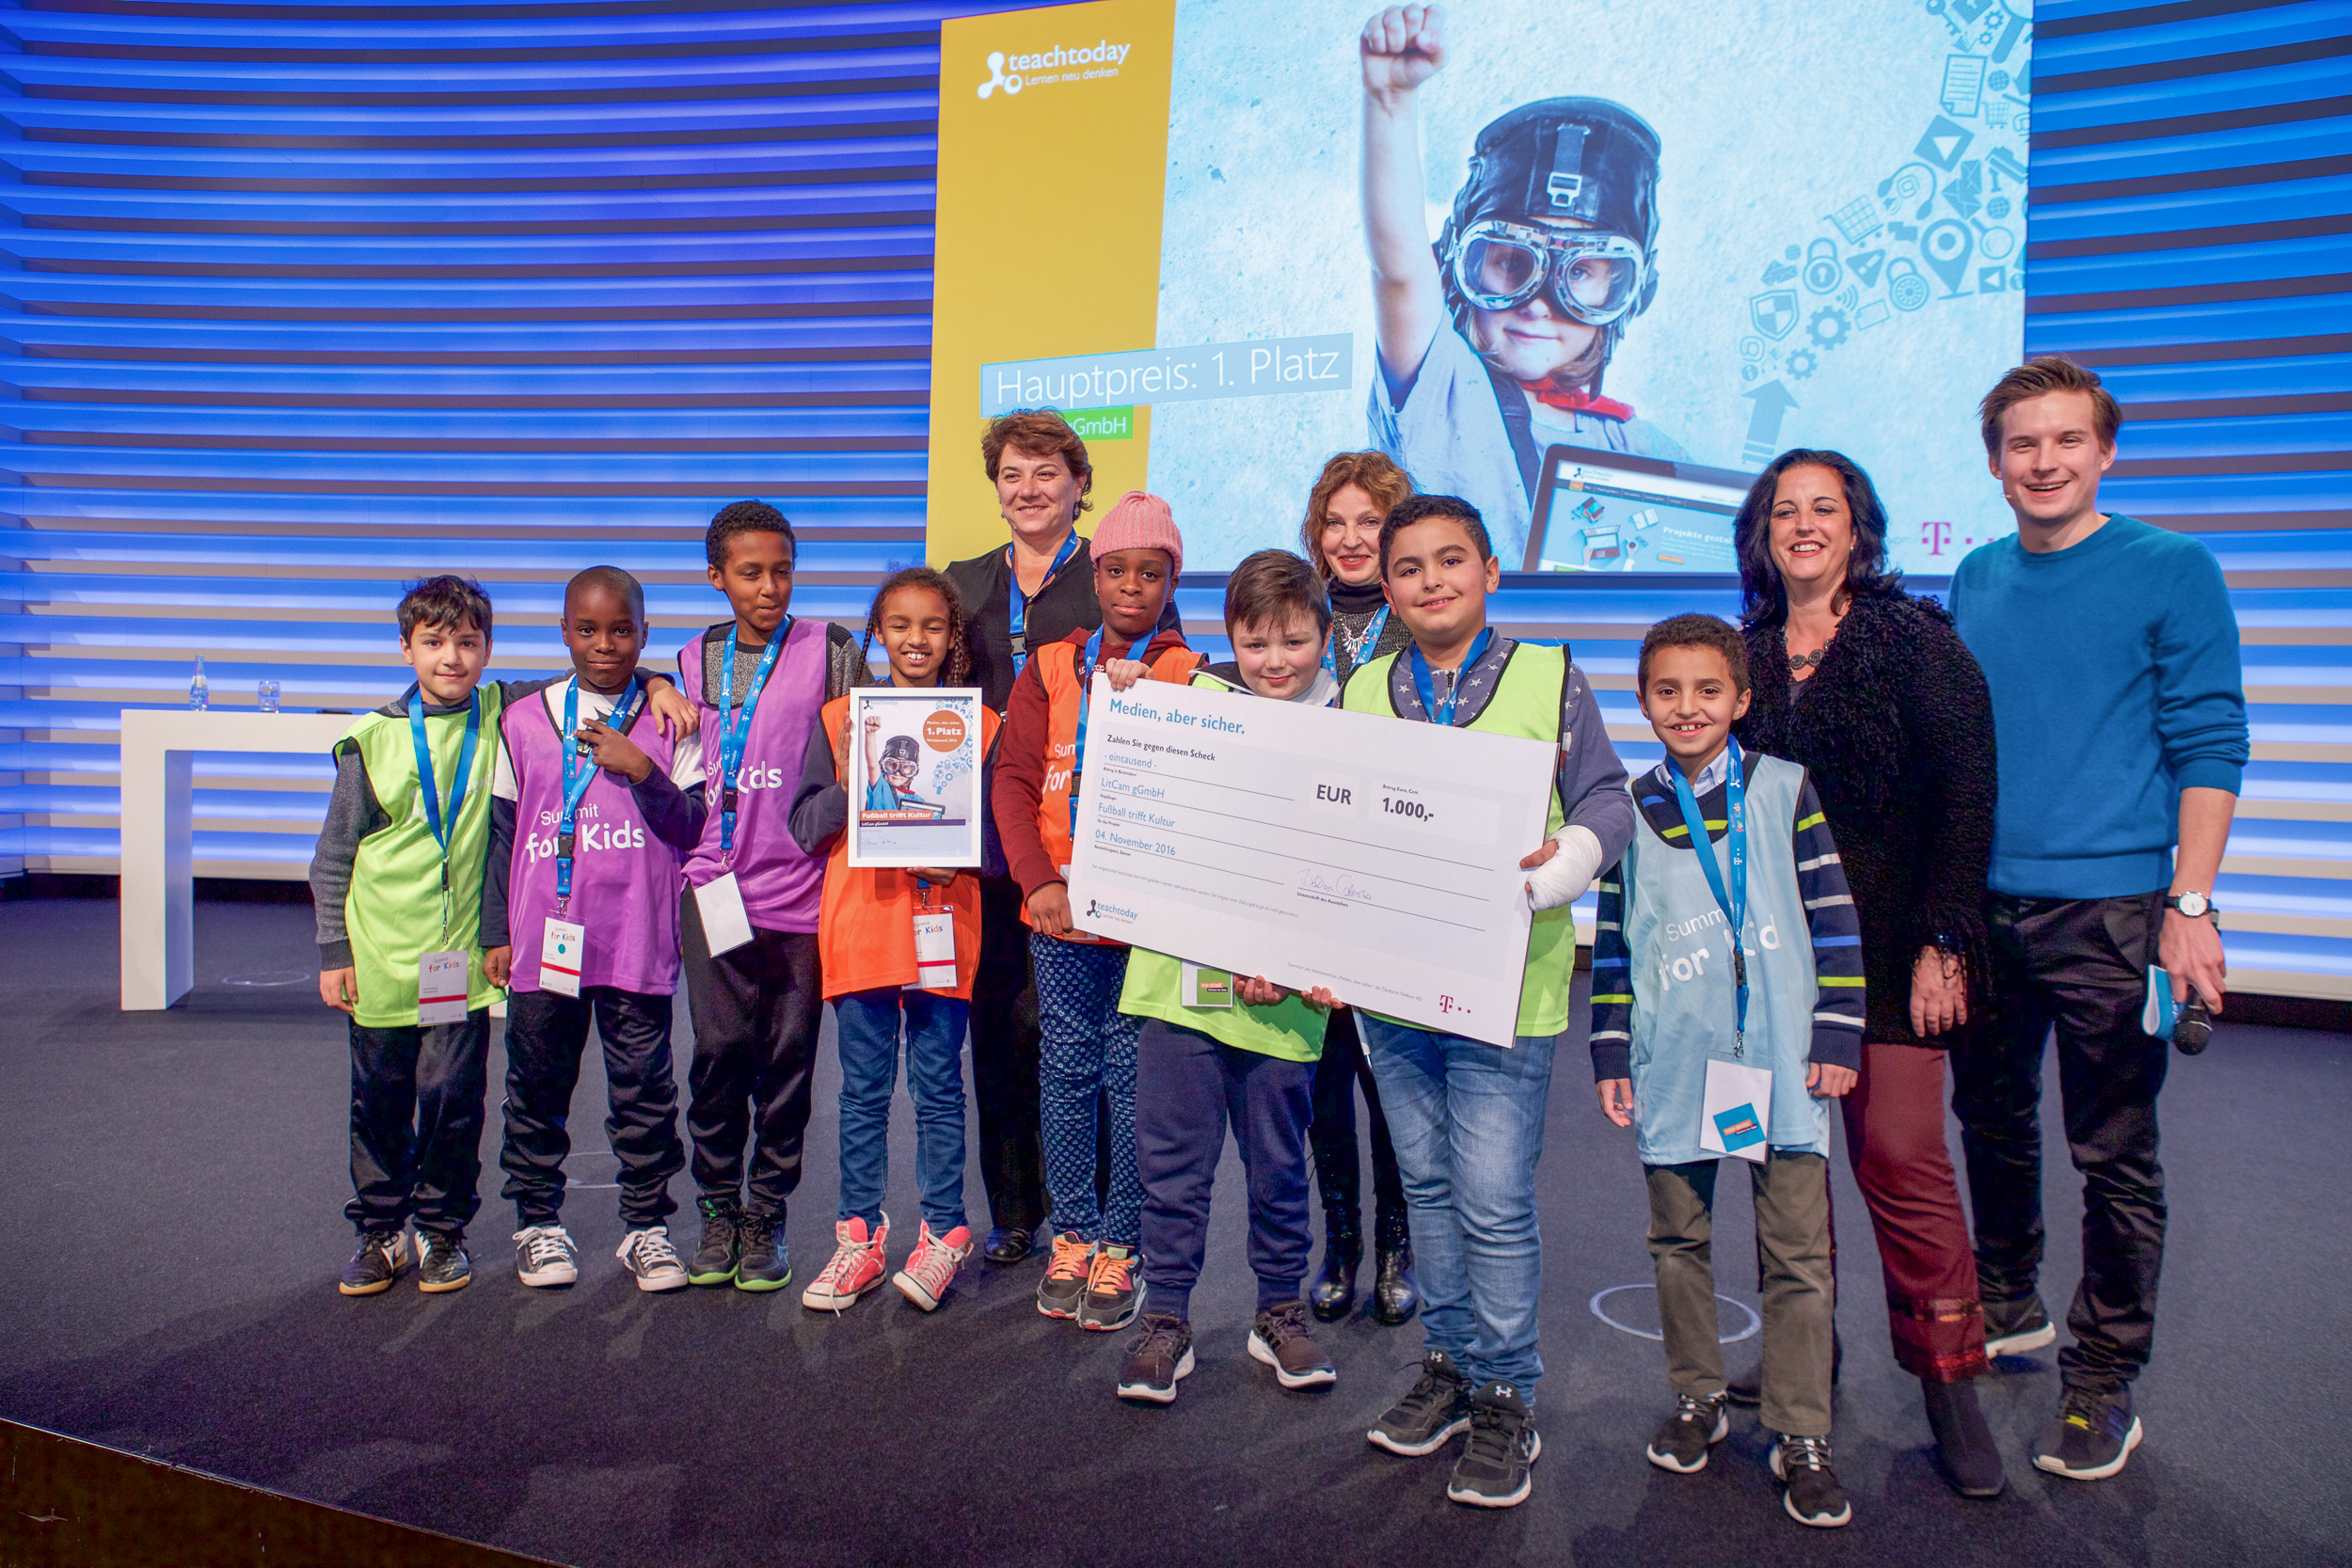 Hauptpreis 1. Platz: LitCam gGmbH mit dem Projekt "Fußball trifft Kultur"